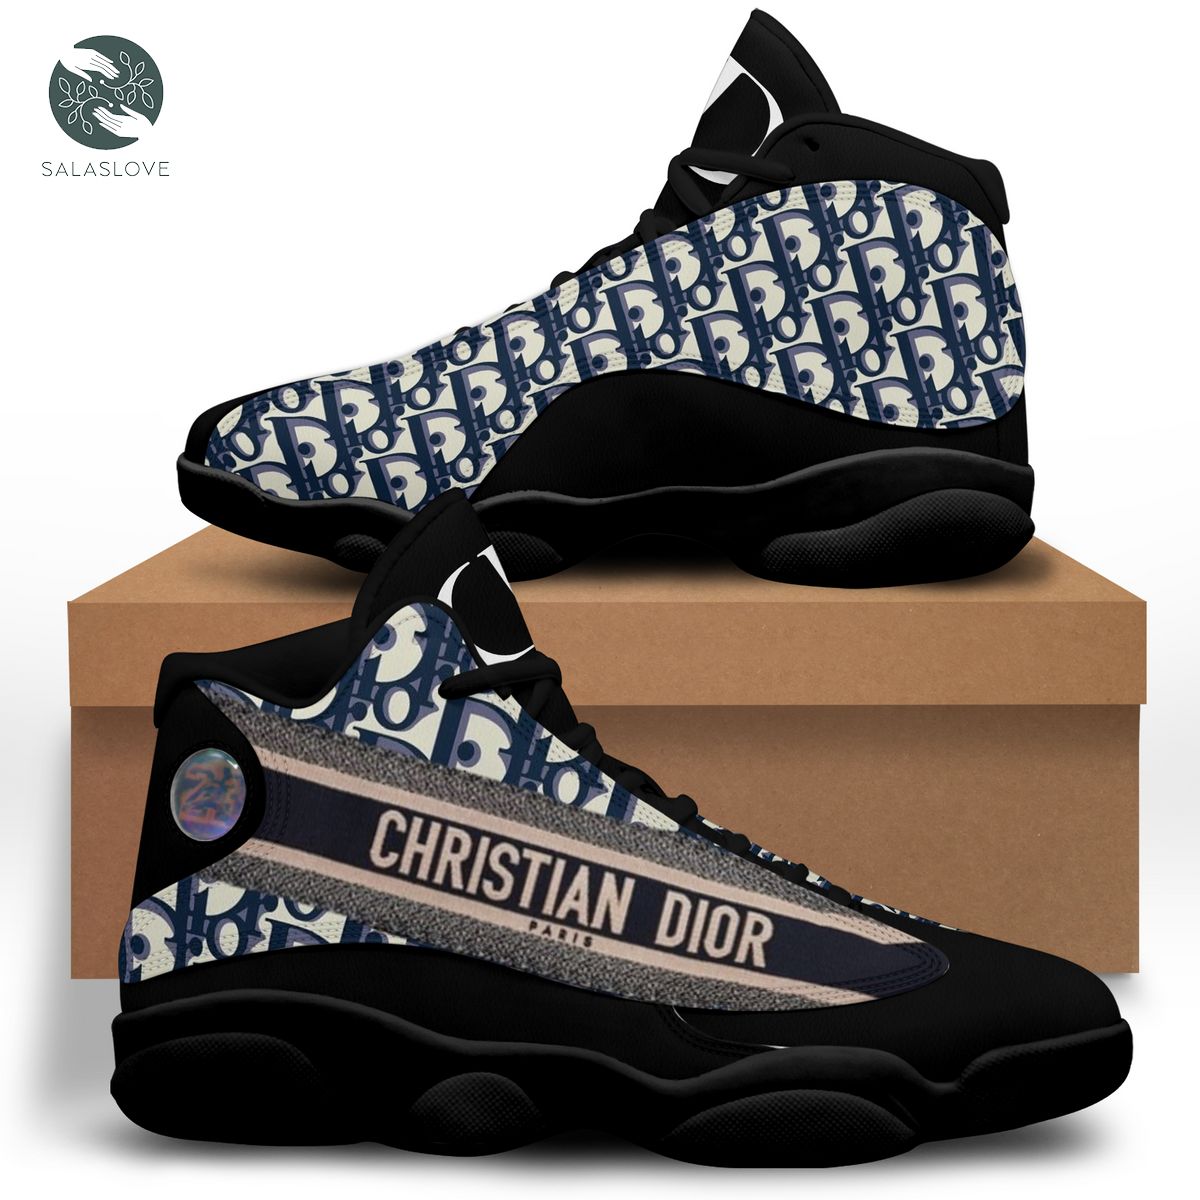 Christian Dior Air Jordan 13 Sneakers Shoes Hot Gifts